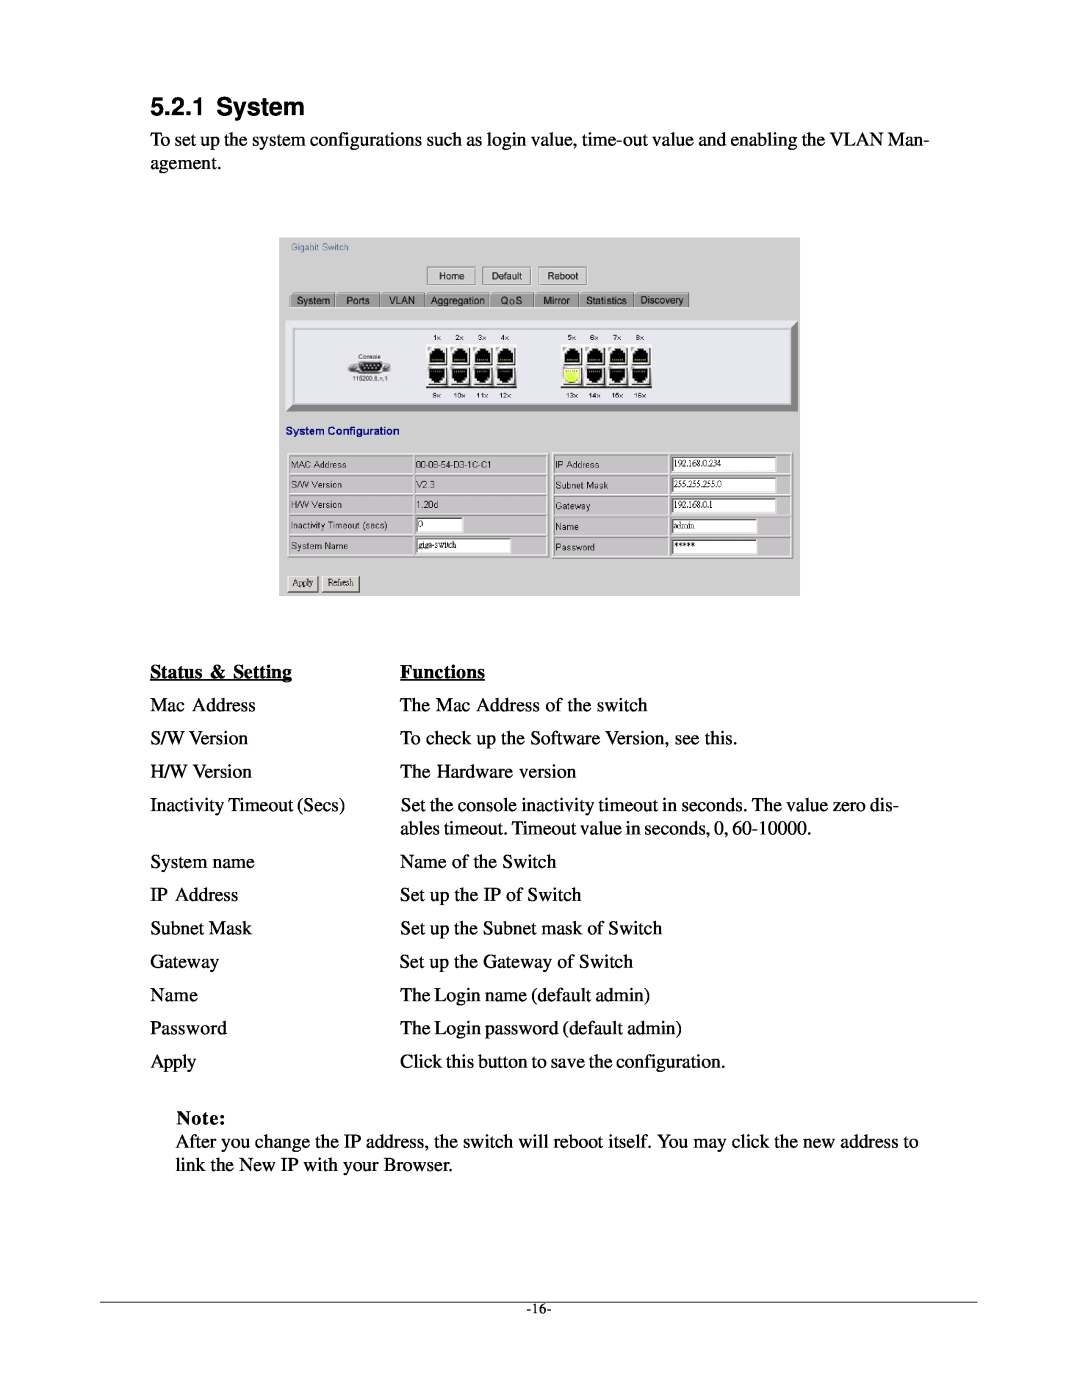 KTI Networks kgs-1601 manual System, Status & Setting, Functions 